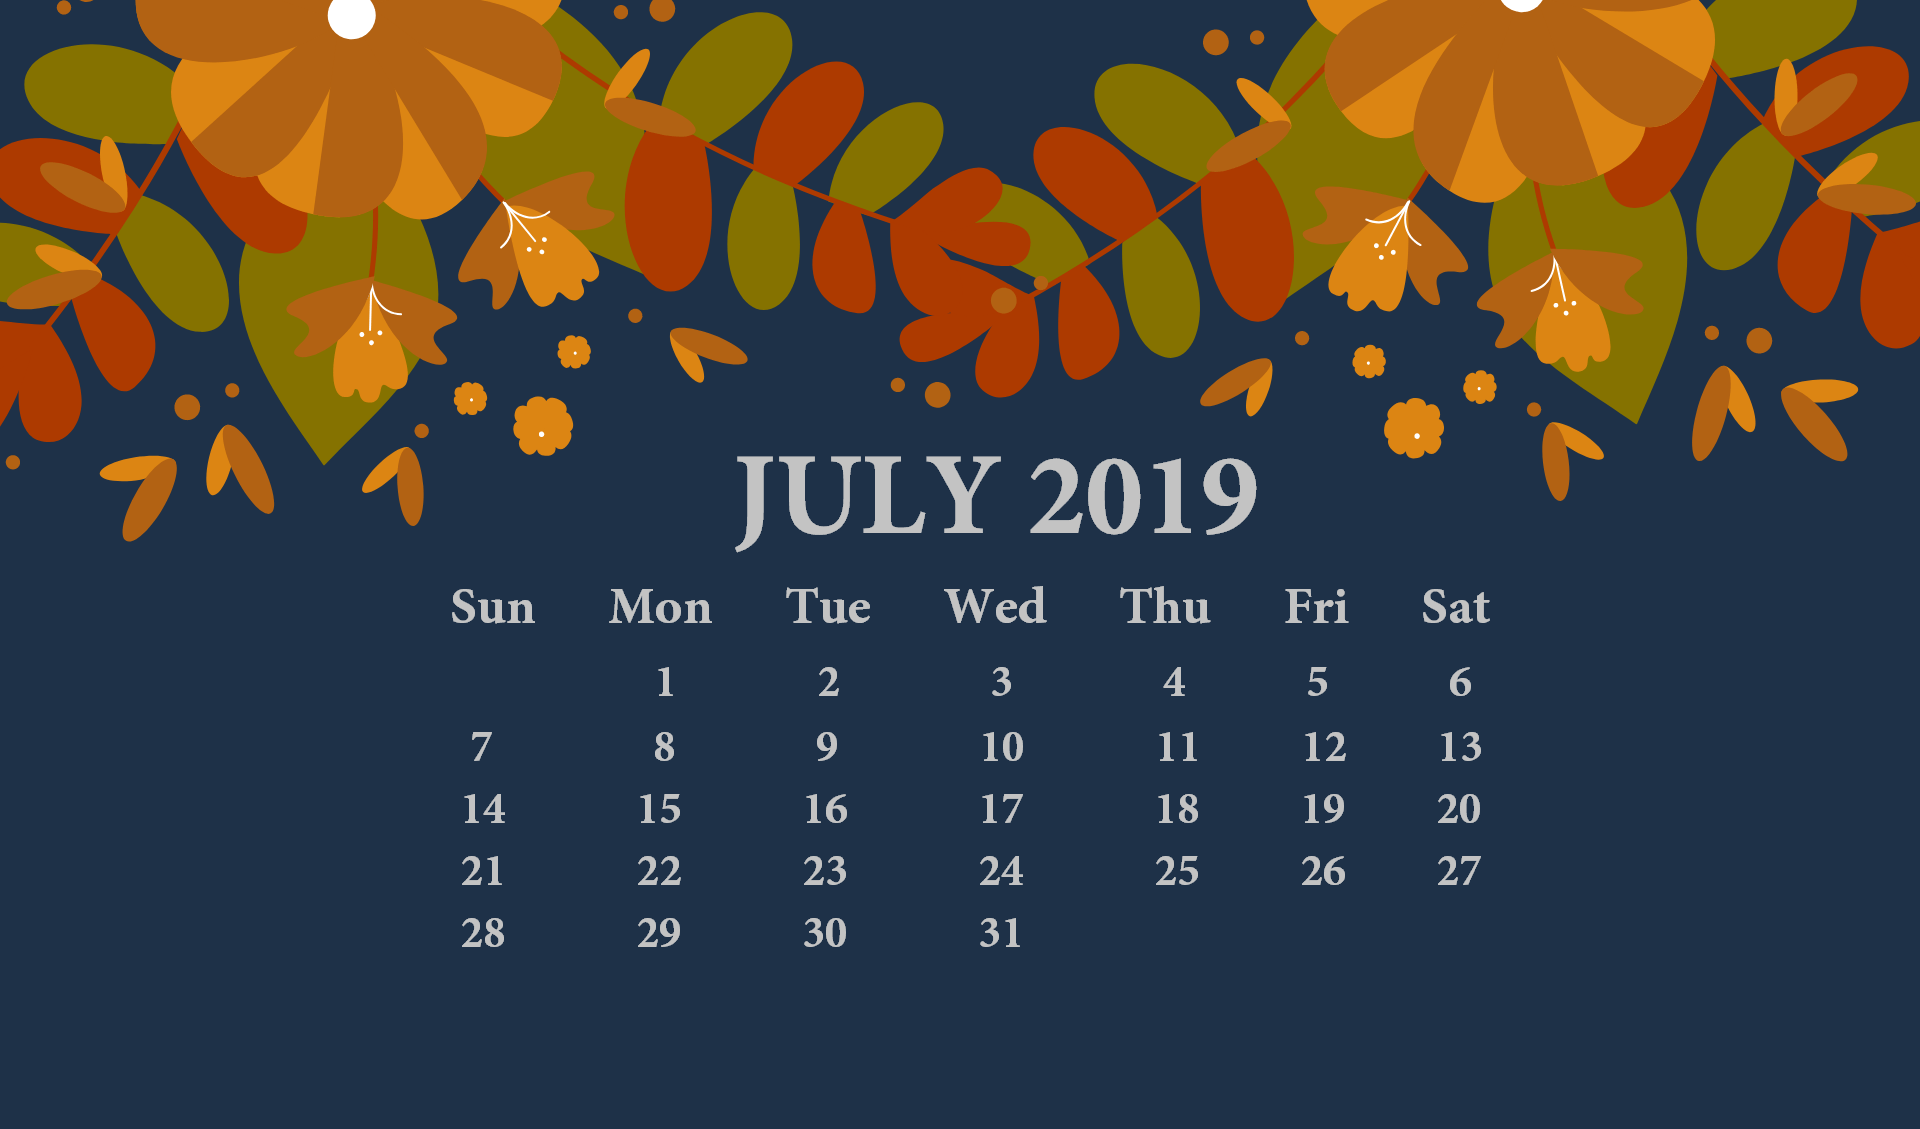 July 2019 Desktop Wallpaper With Calendar. Desk Calendar in 2019